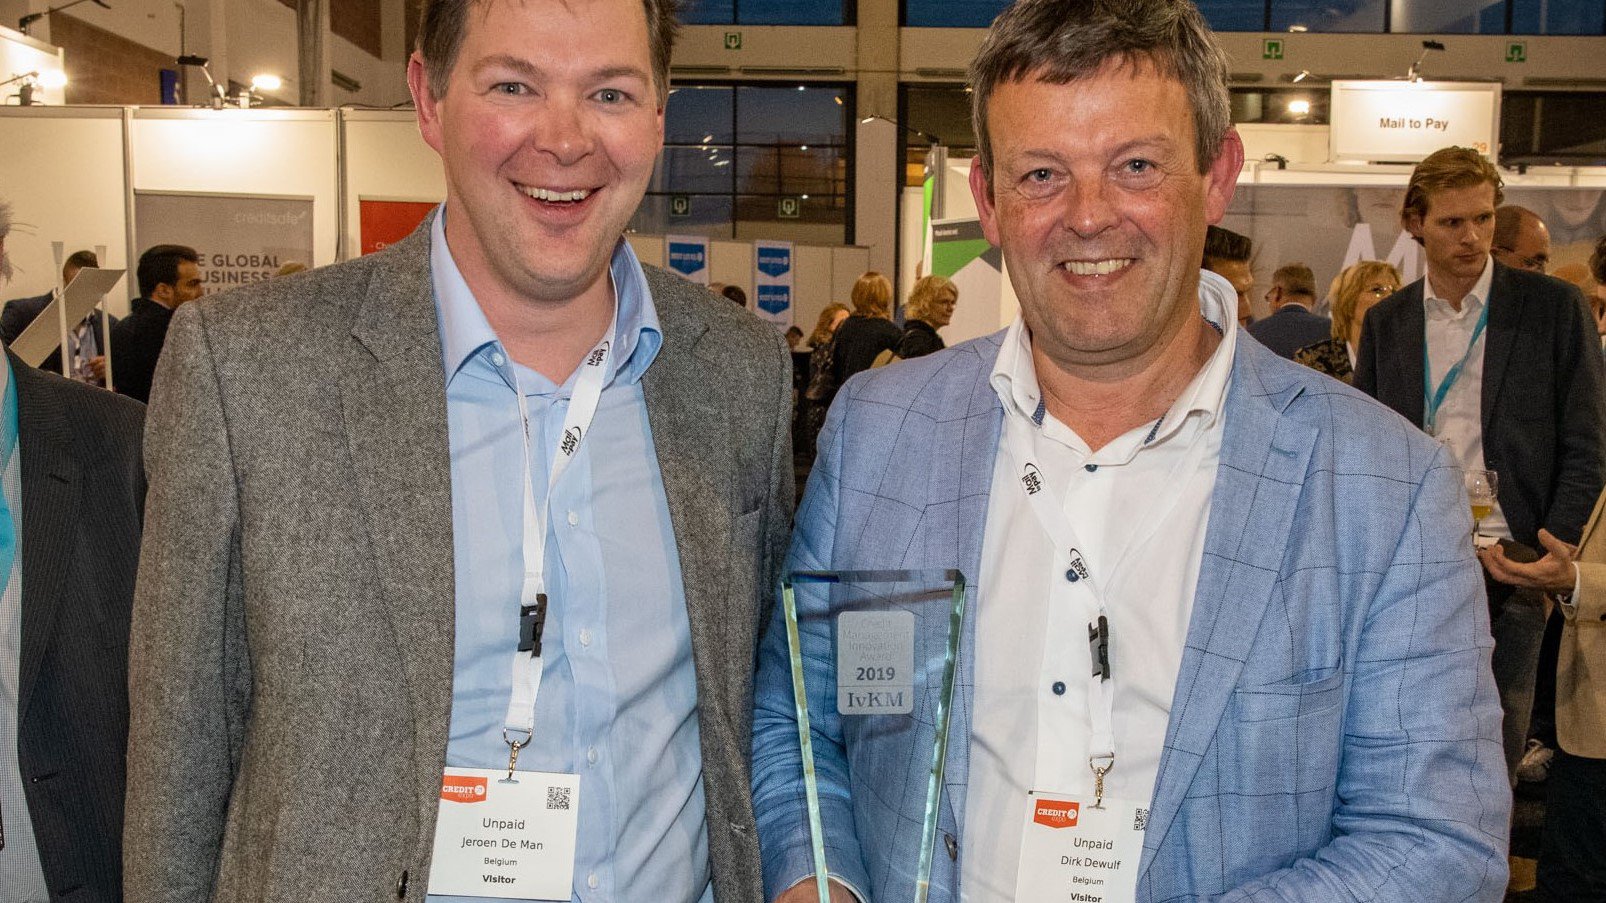 Unpaid wint de Credit management Innovation Award 2019